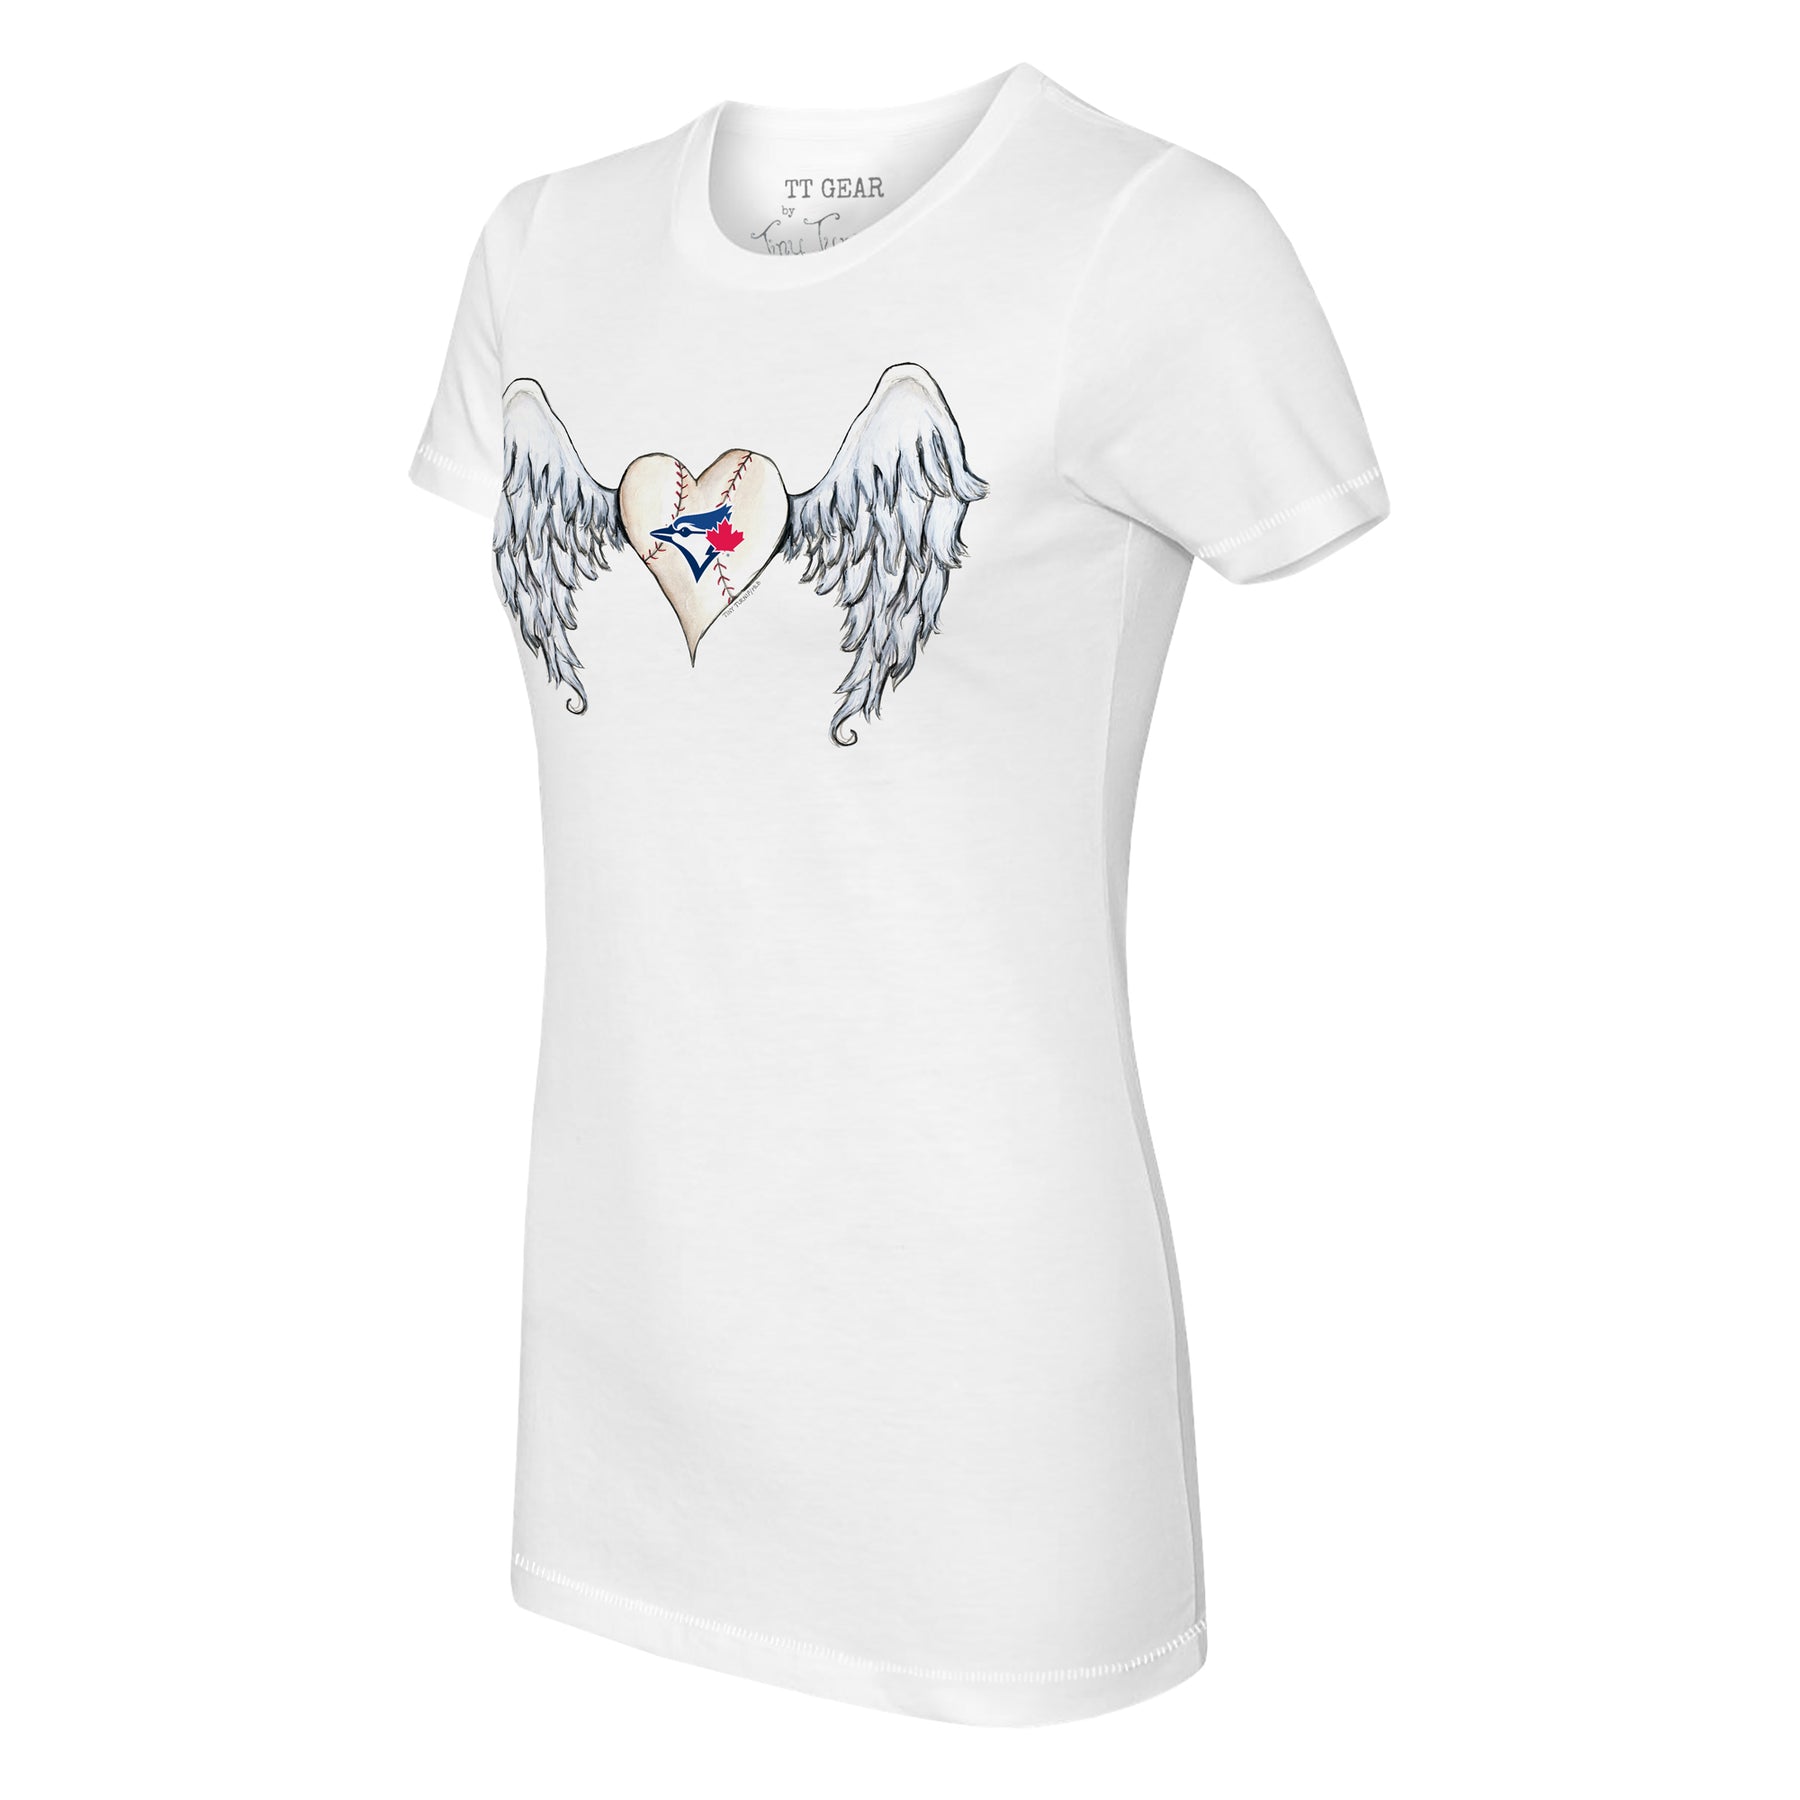 Toronto Blue Jays Angel Wings Tee Shirt